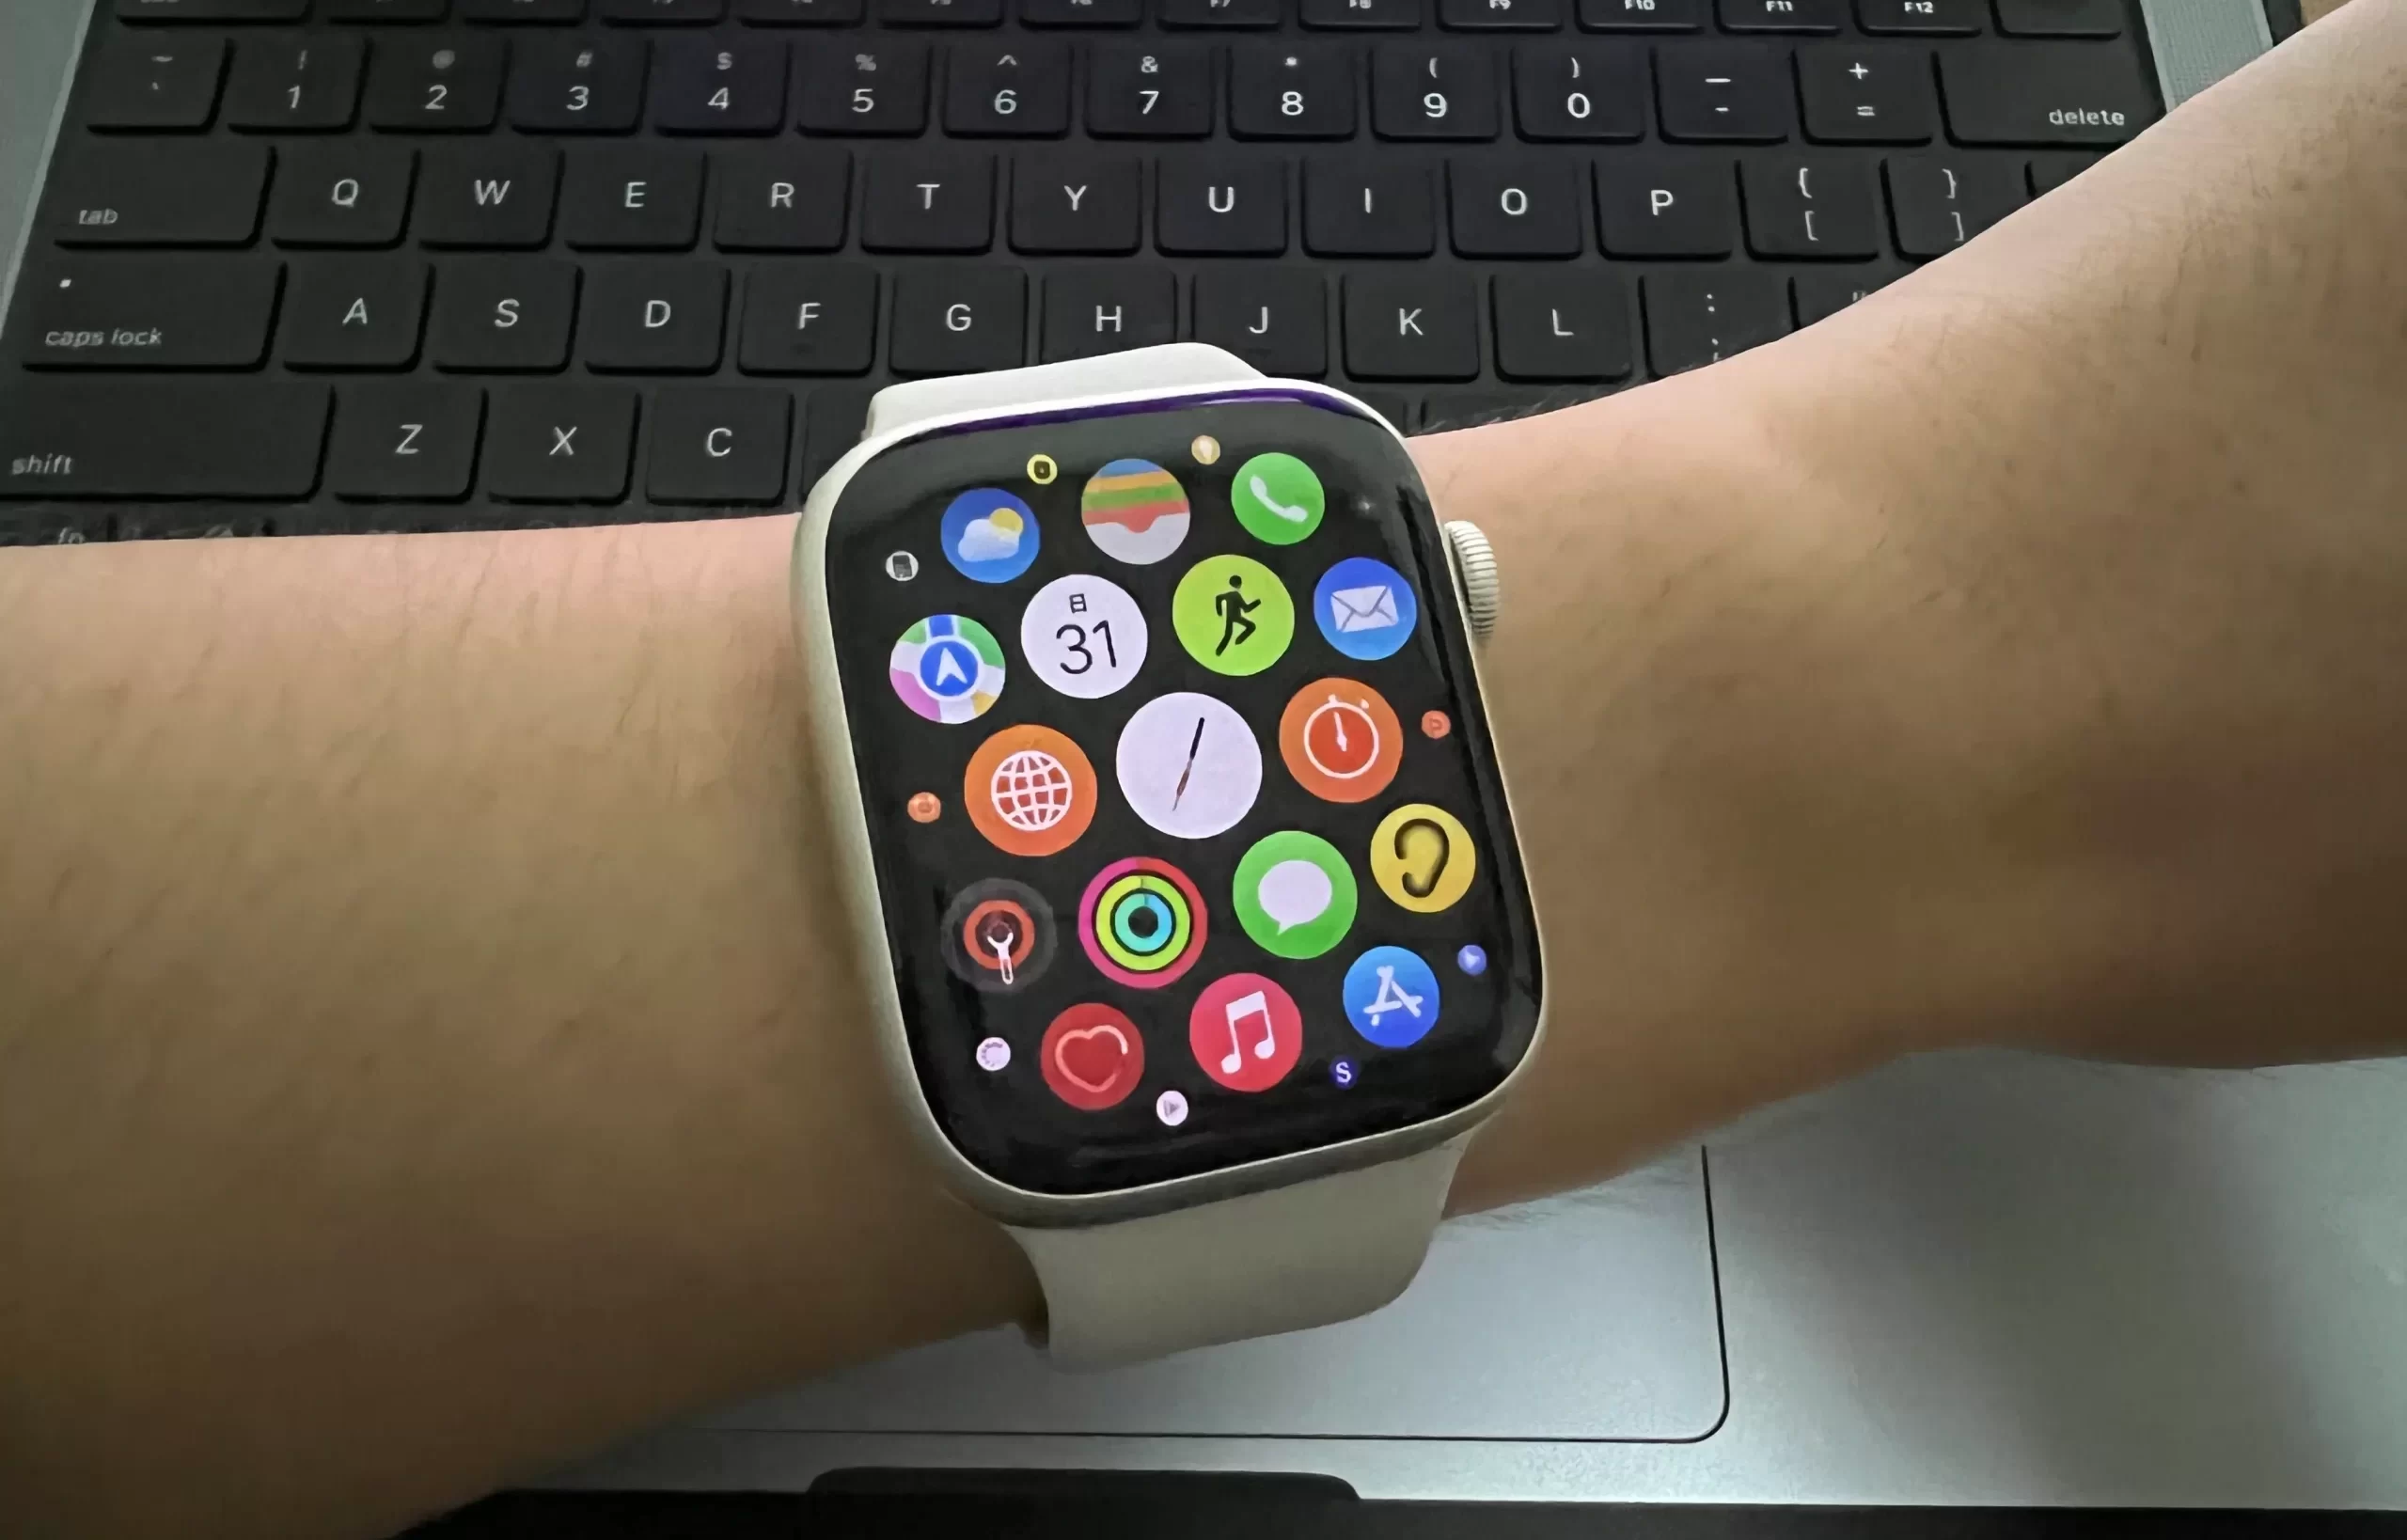 Apple Watch7 実機レビュー使用感は？ 大きい画面で操作が快適 